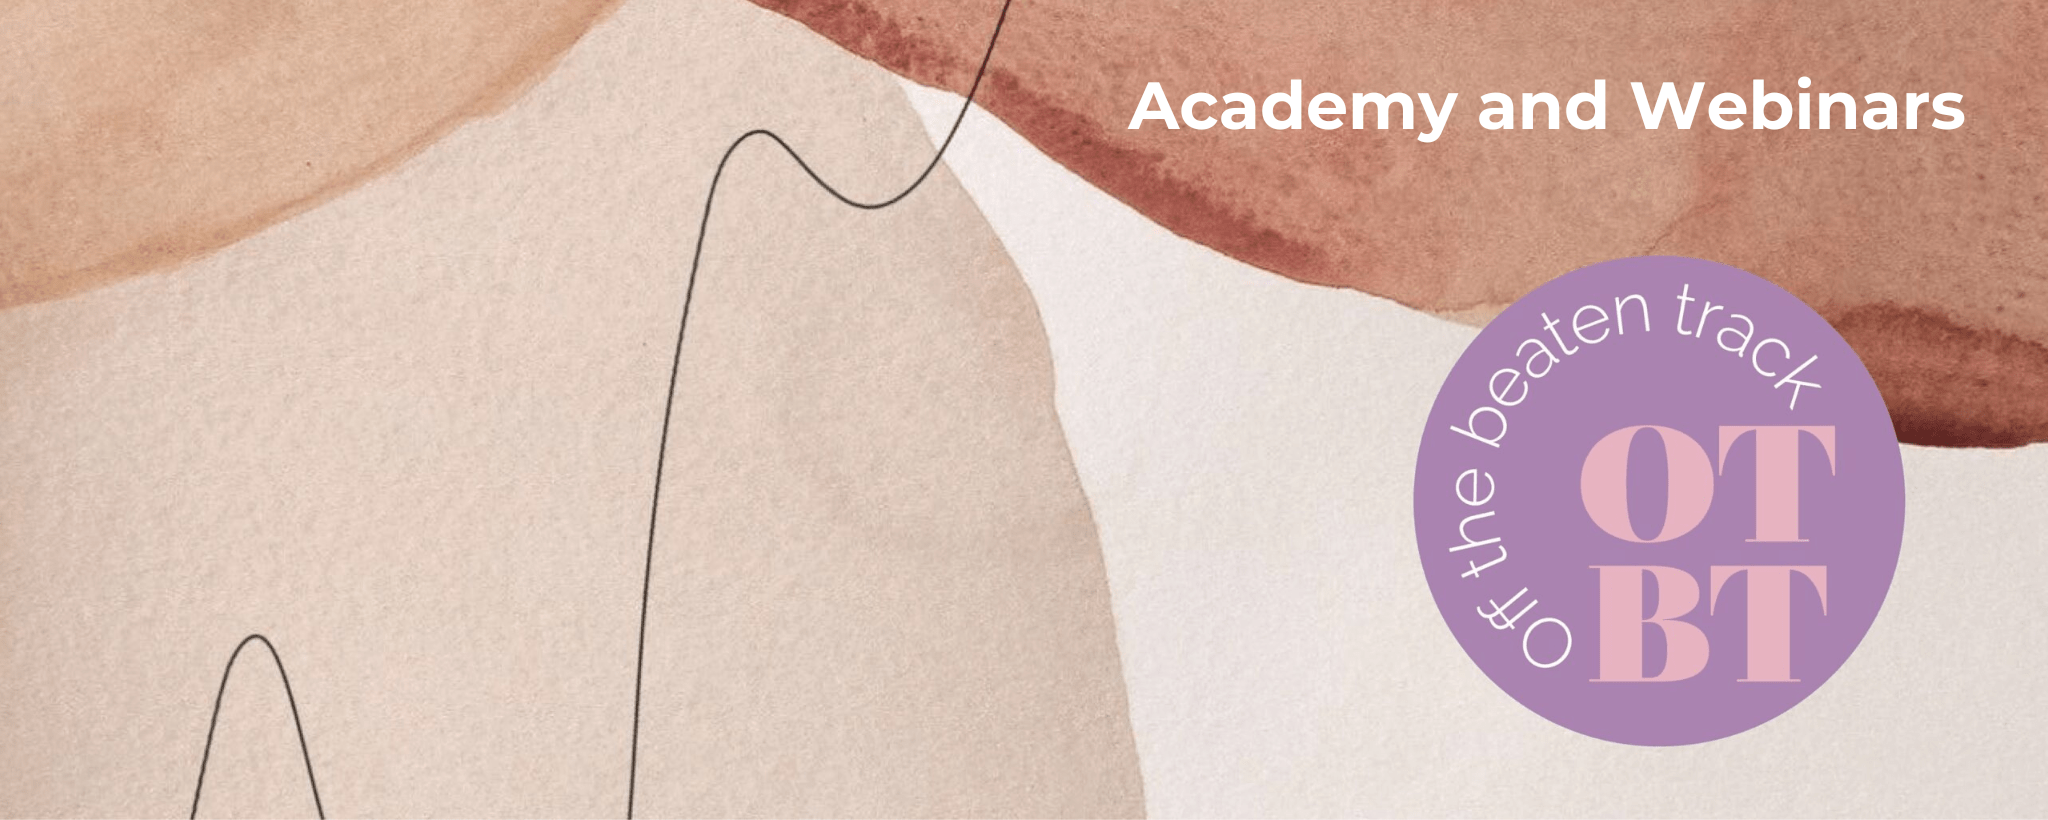 Academy and Webinars